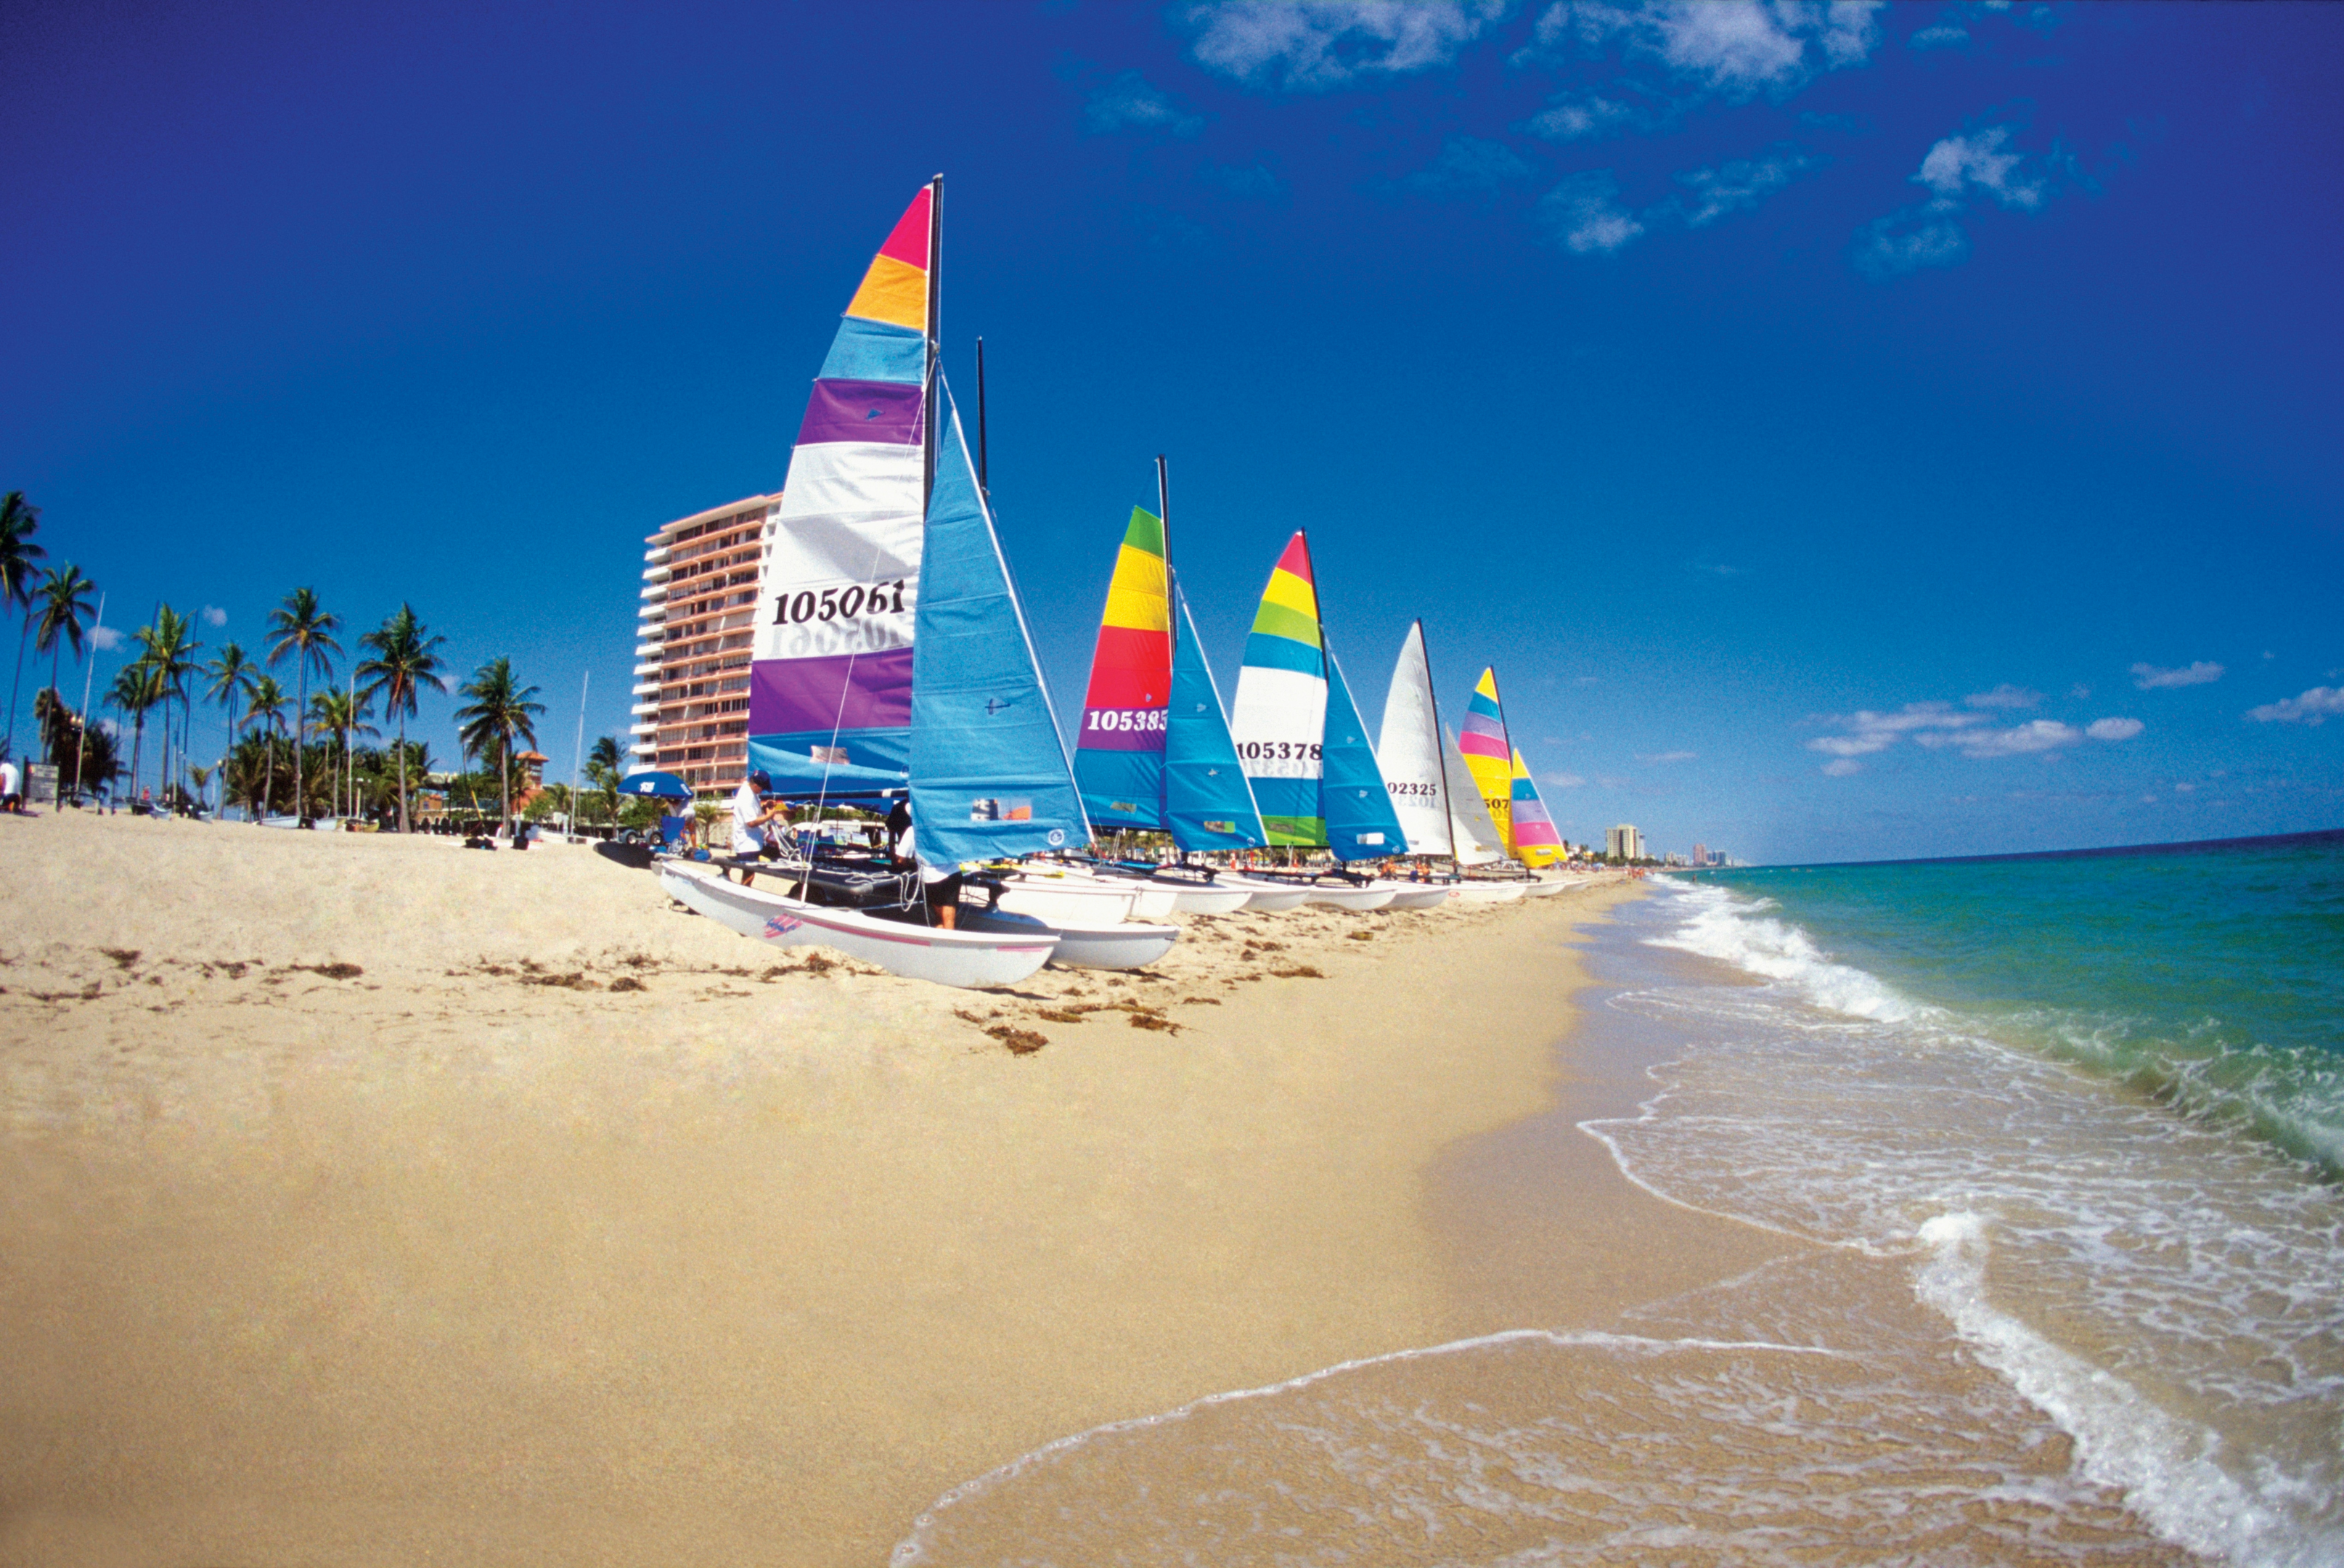 Sei catamarani seduti sulle dune di sabbia a Ft. Lauderdale Beach